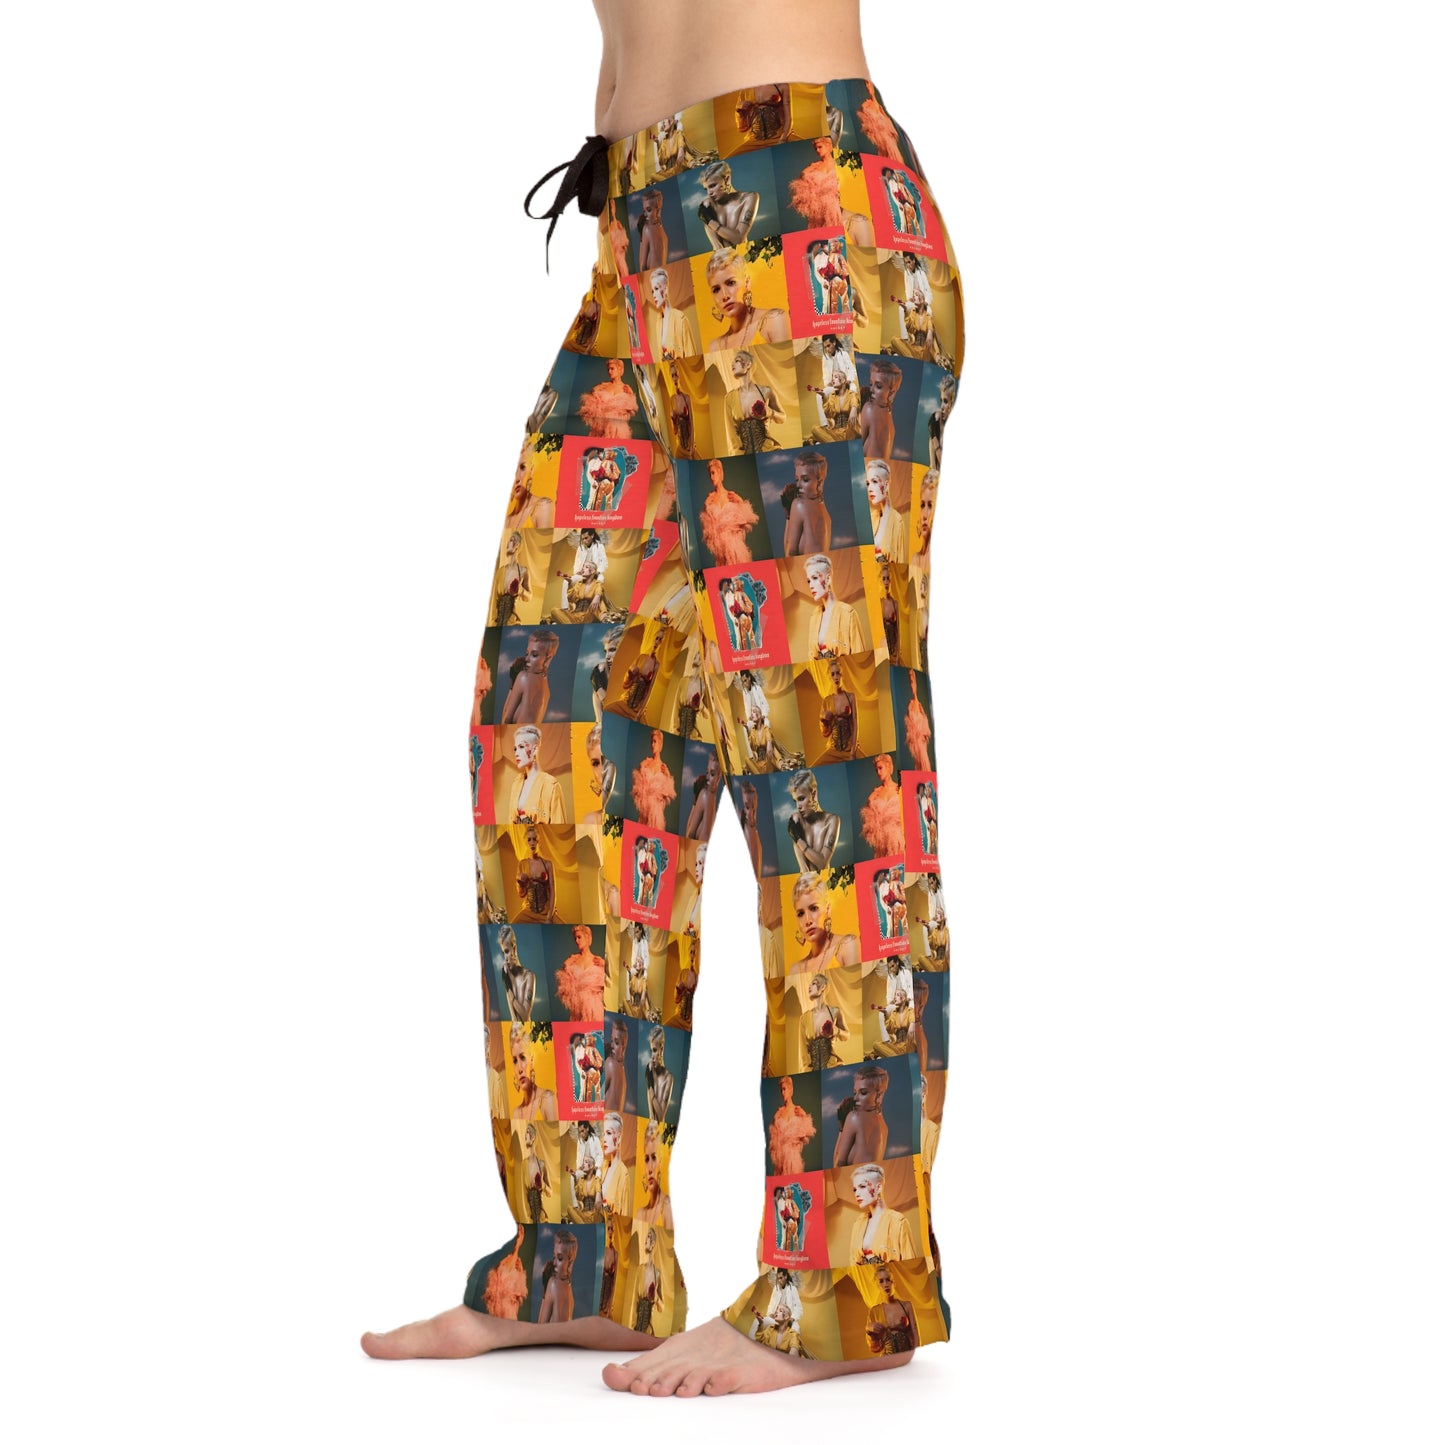 Halsey Hopeless Fountain Kingdom Mosaic Women's Pajama Pants